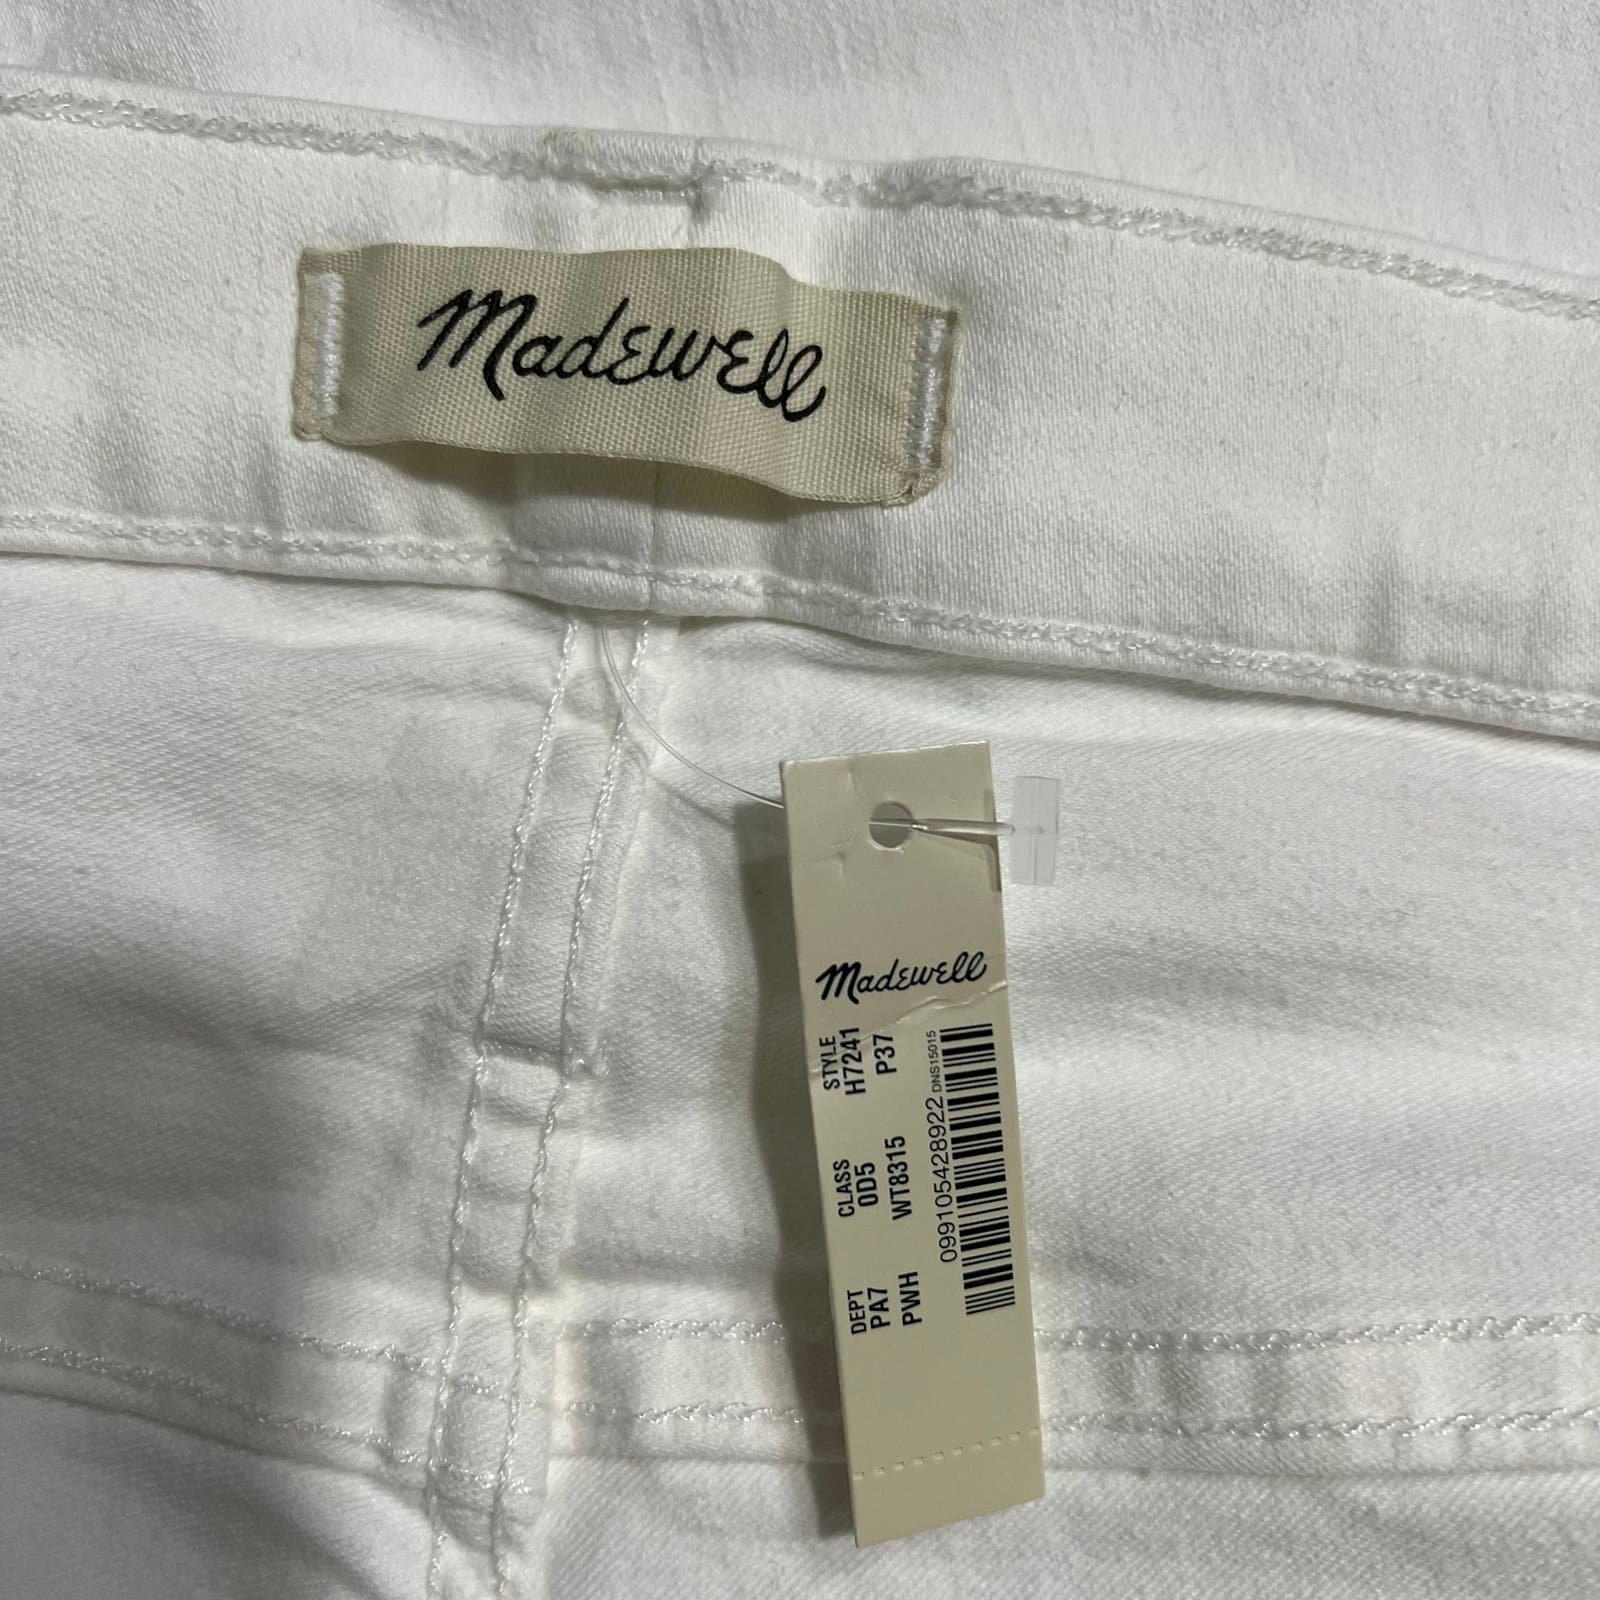 The Best Seller Madewell Cali Demi Boot White Raw Hem Jeans Women´s Plus Size 37P Petite LjPt2198R online store